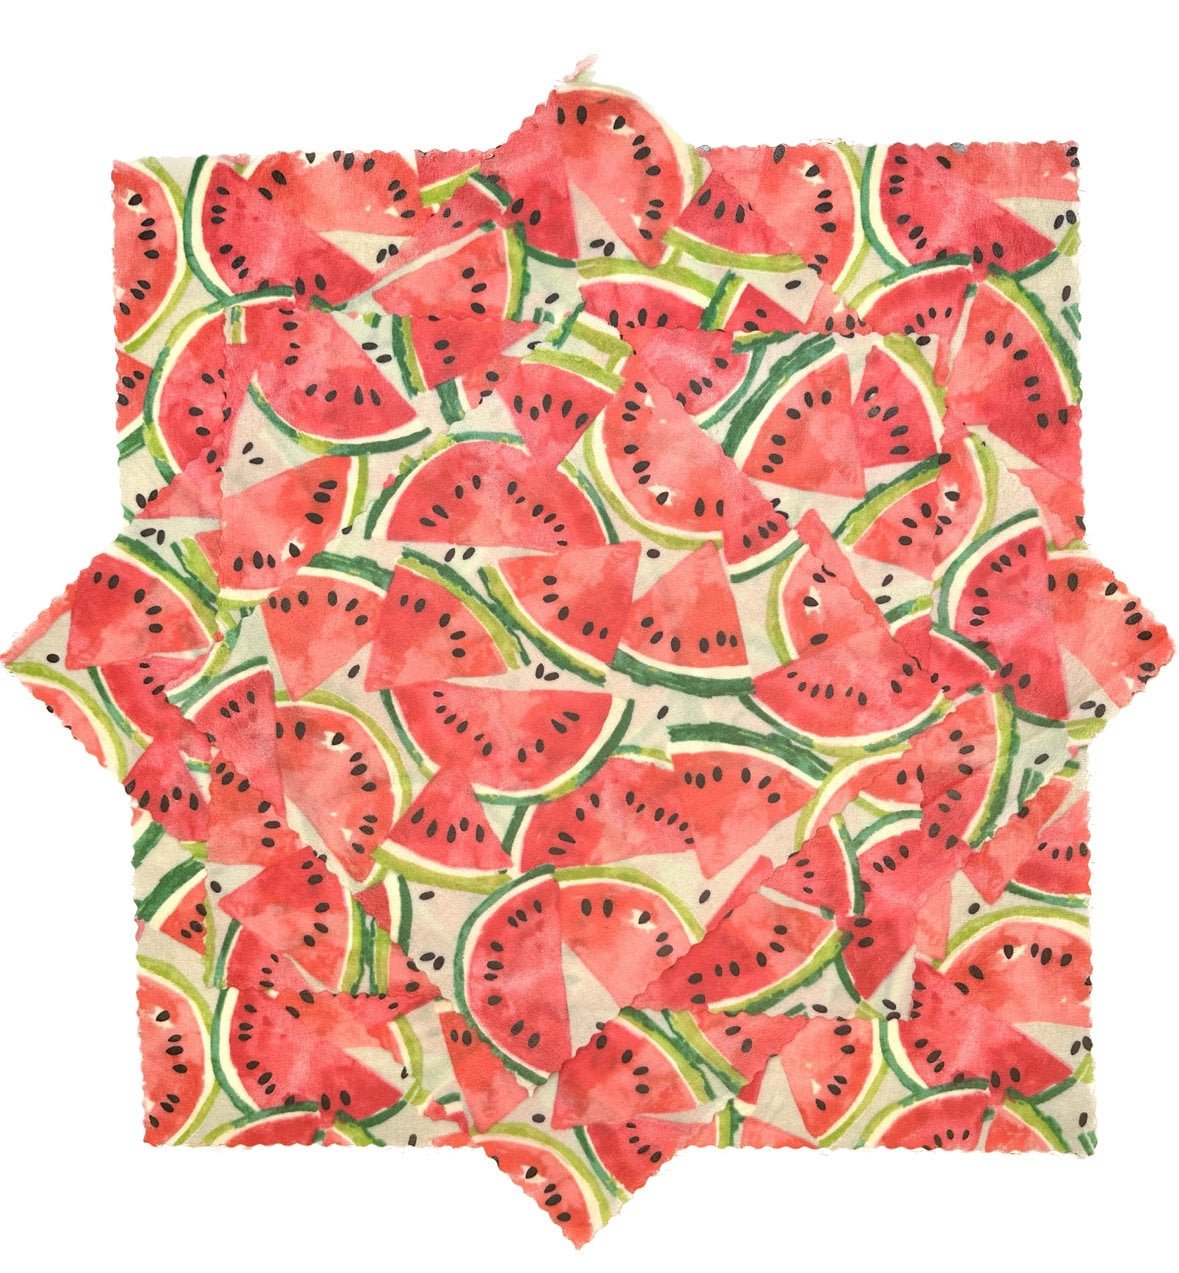 BEESWAX WRAP Watermelons || Single Sheet 14x14 || Eco-Alternative Food Wrap